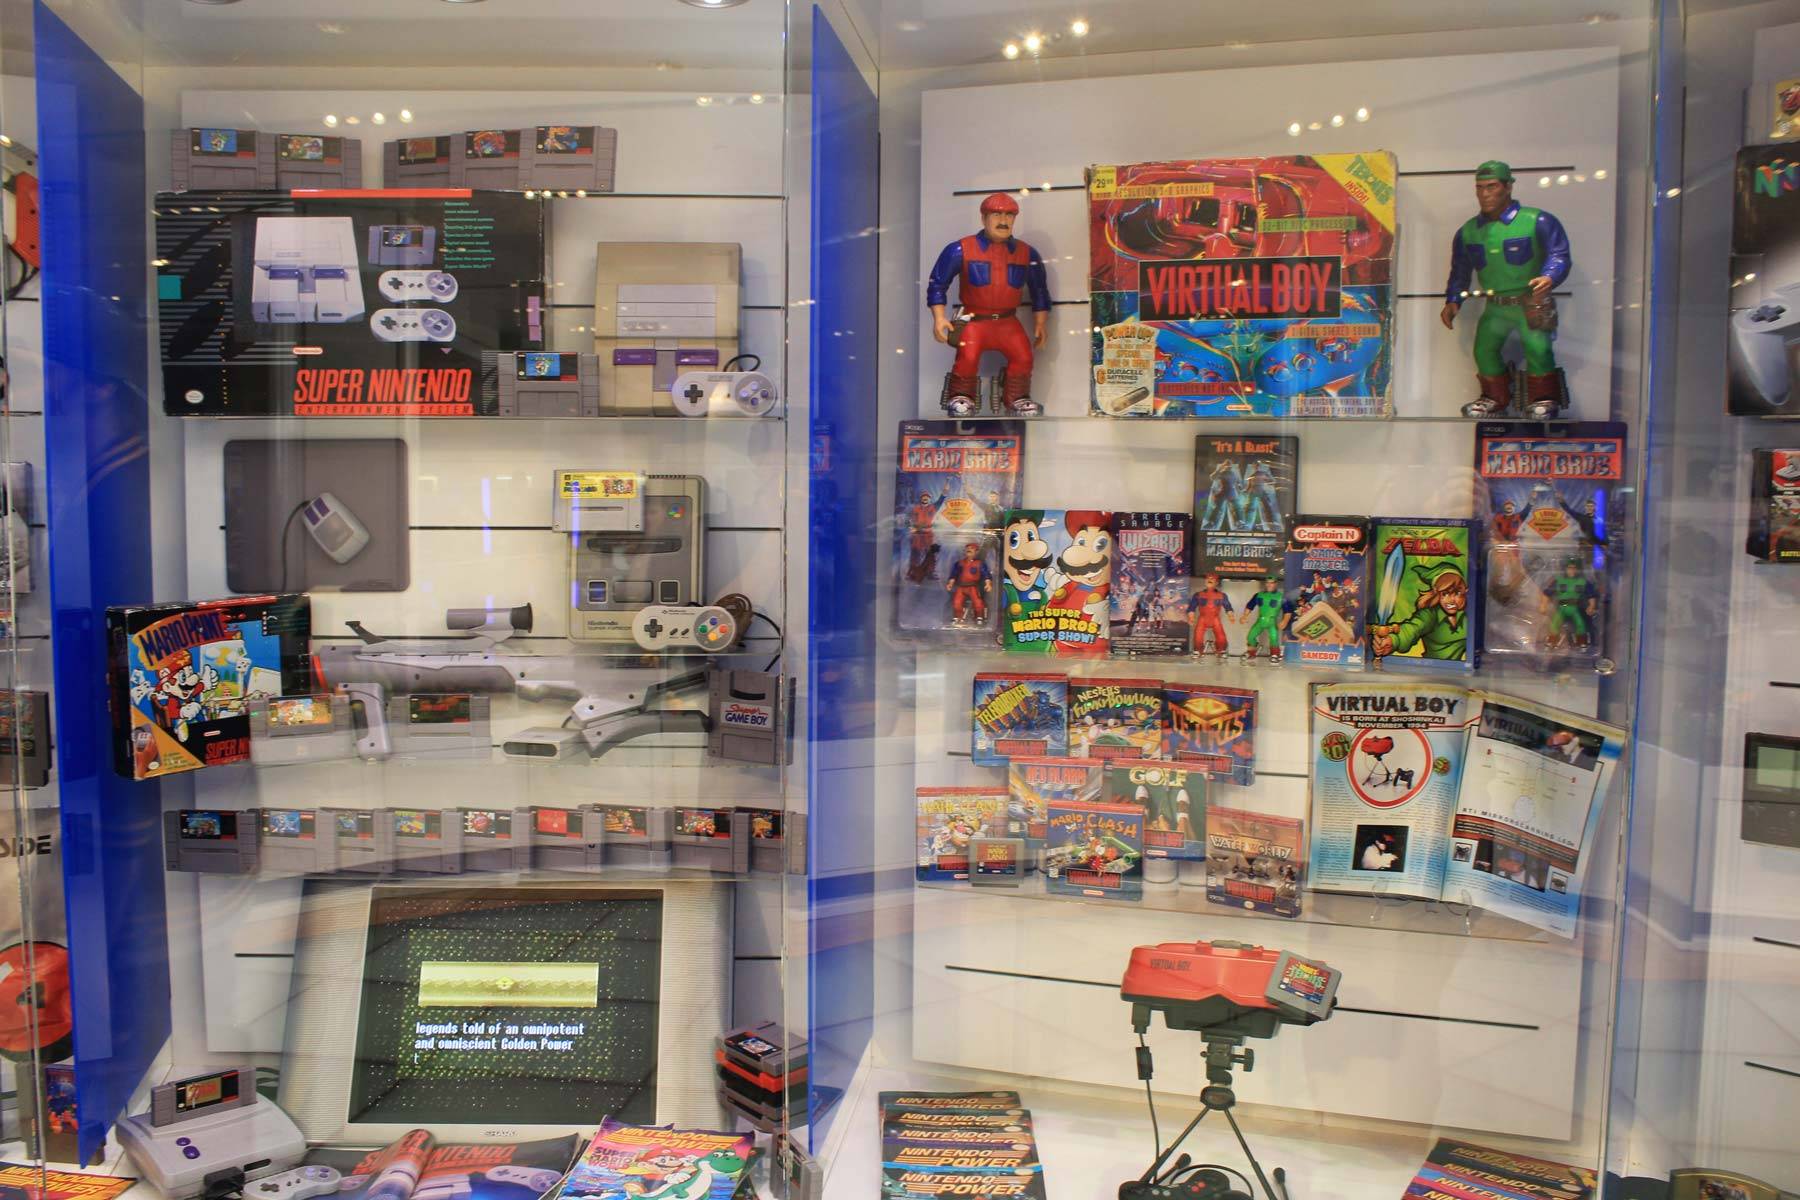 Super Nitnendo and Virtual Boy merchandise